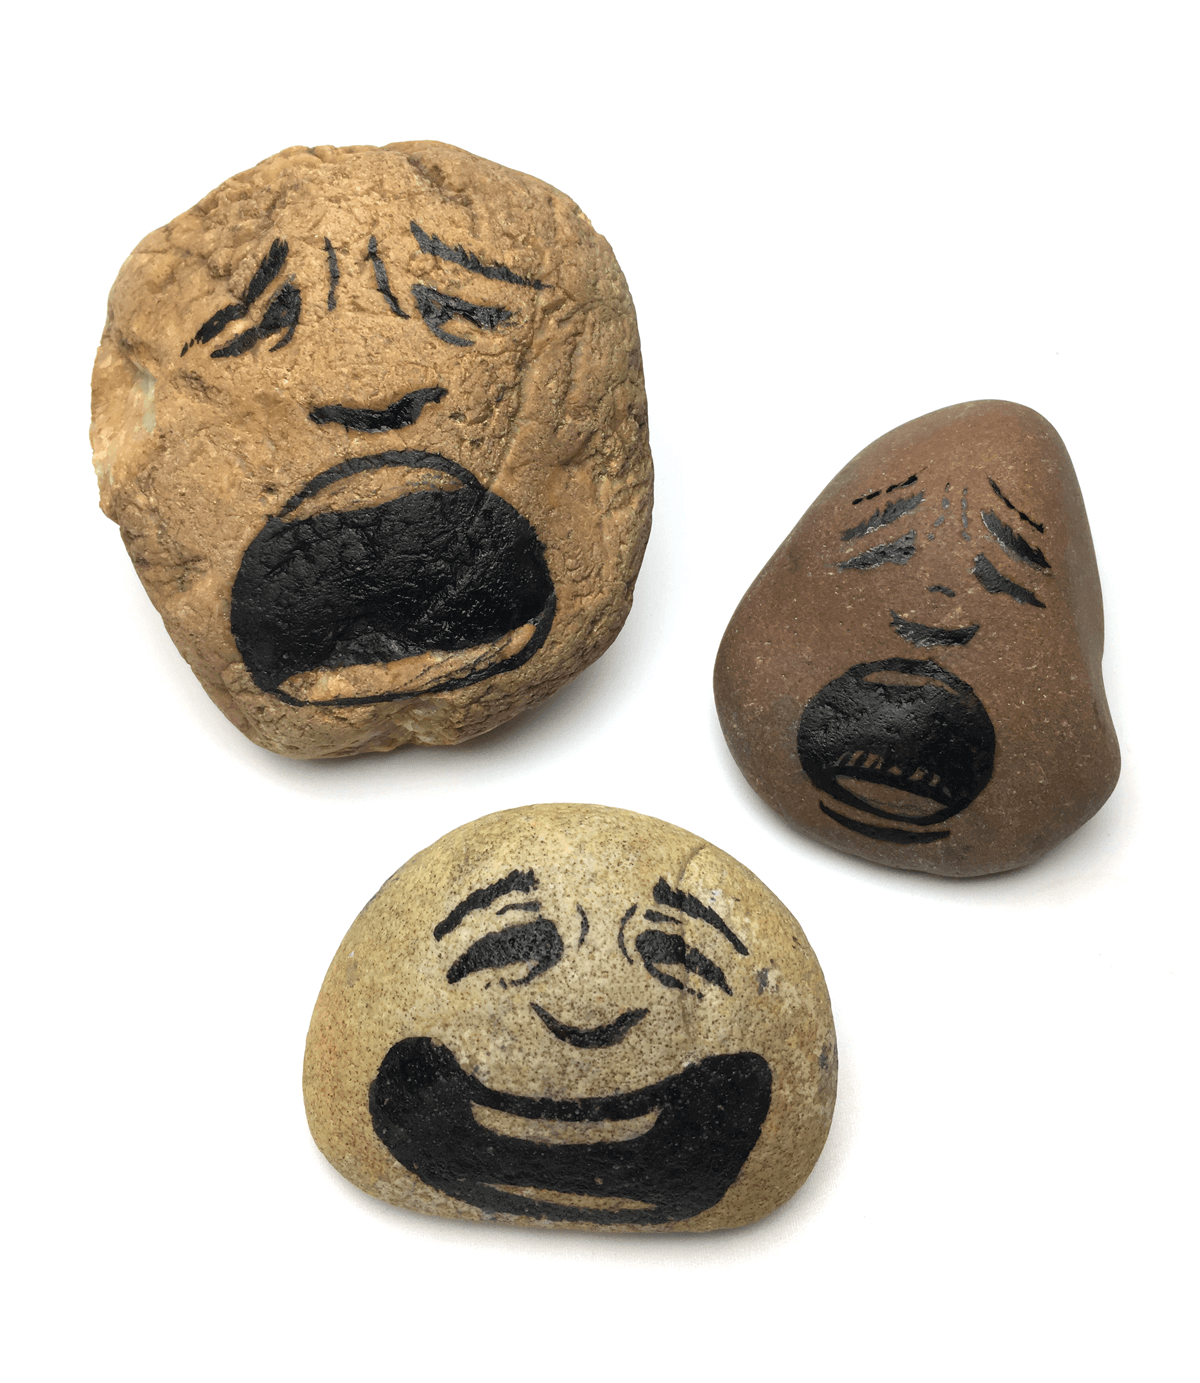 Crying rocks